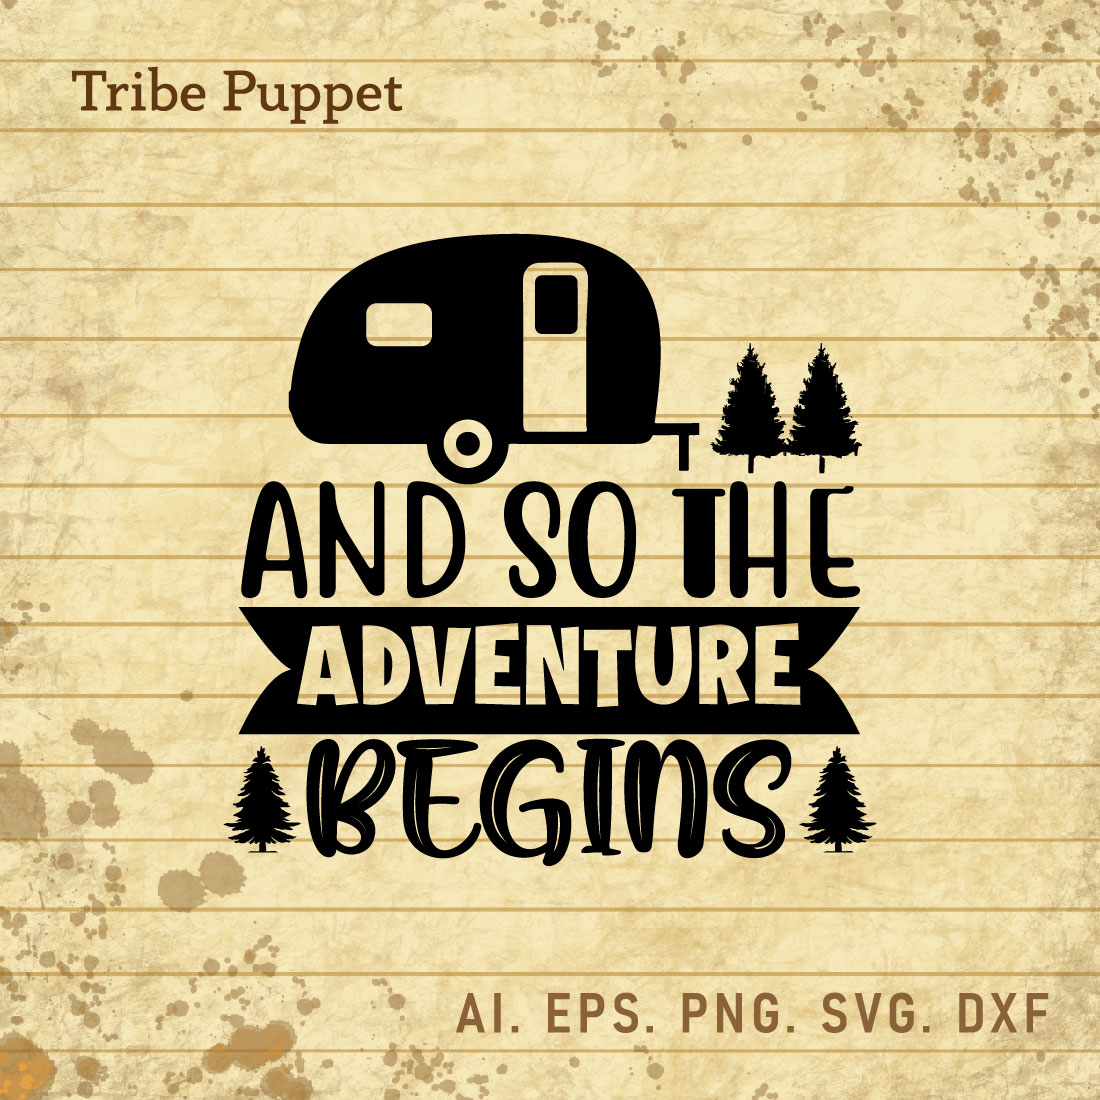 Adventure Typography cover image.